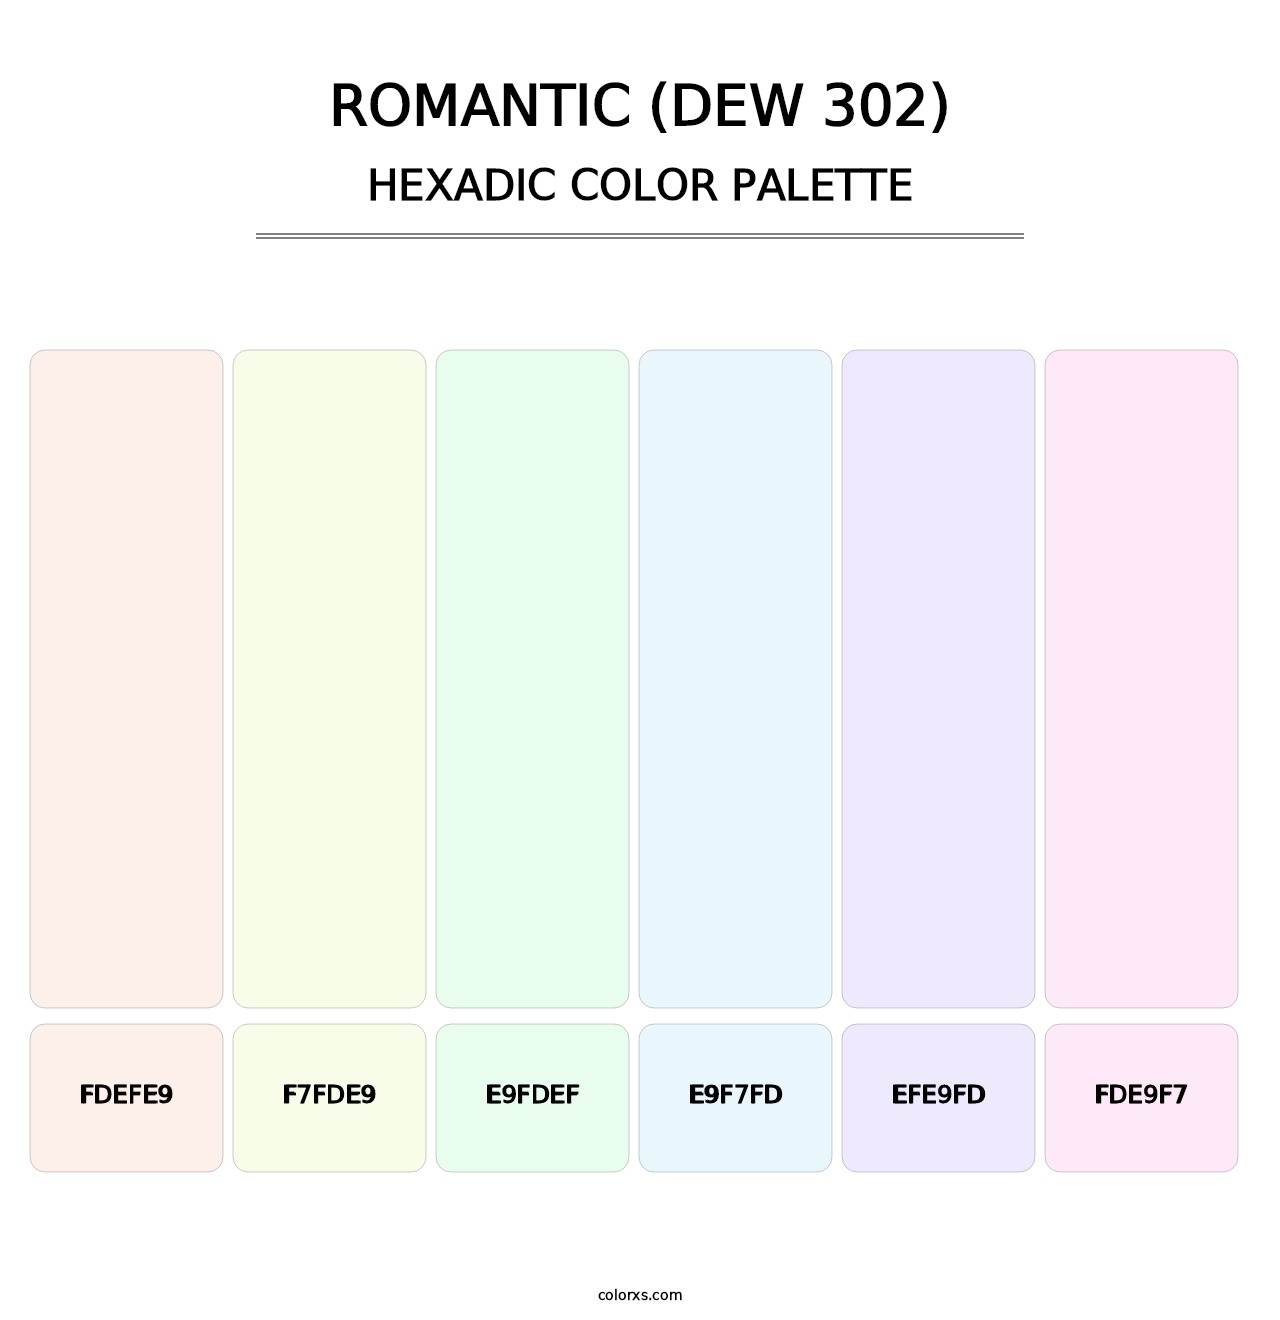 Romantic (DEW 302) - Hexadic Color Palette